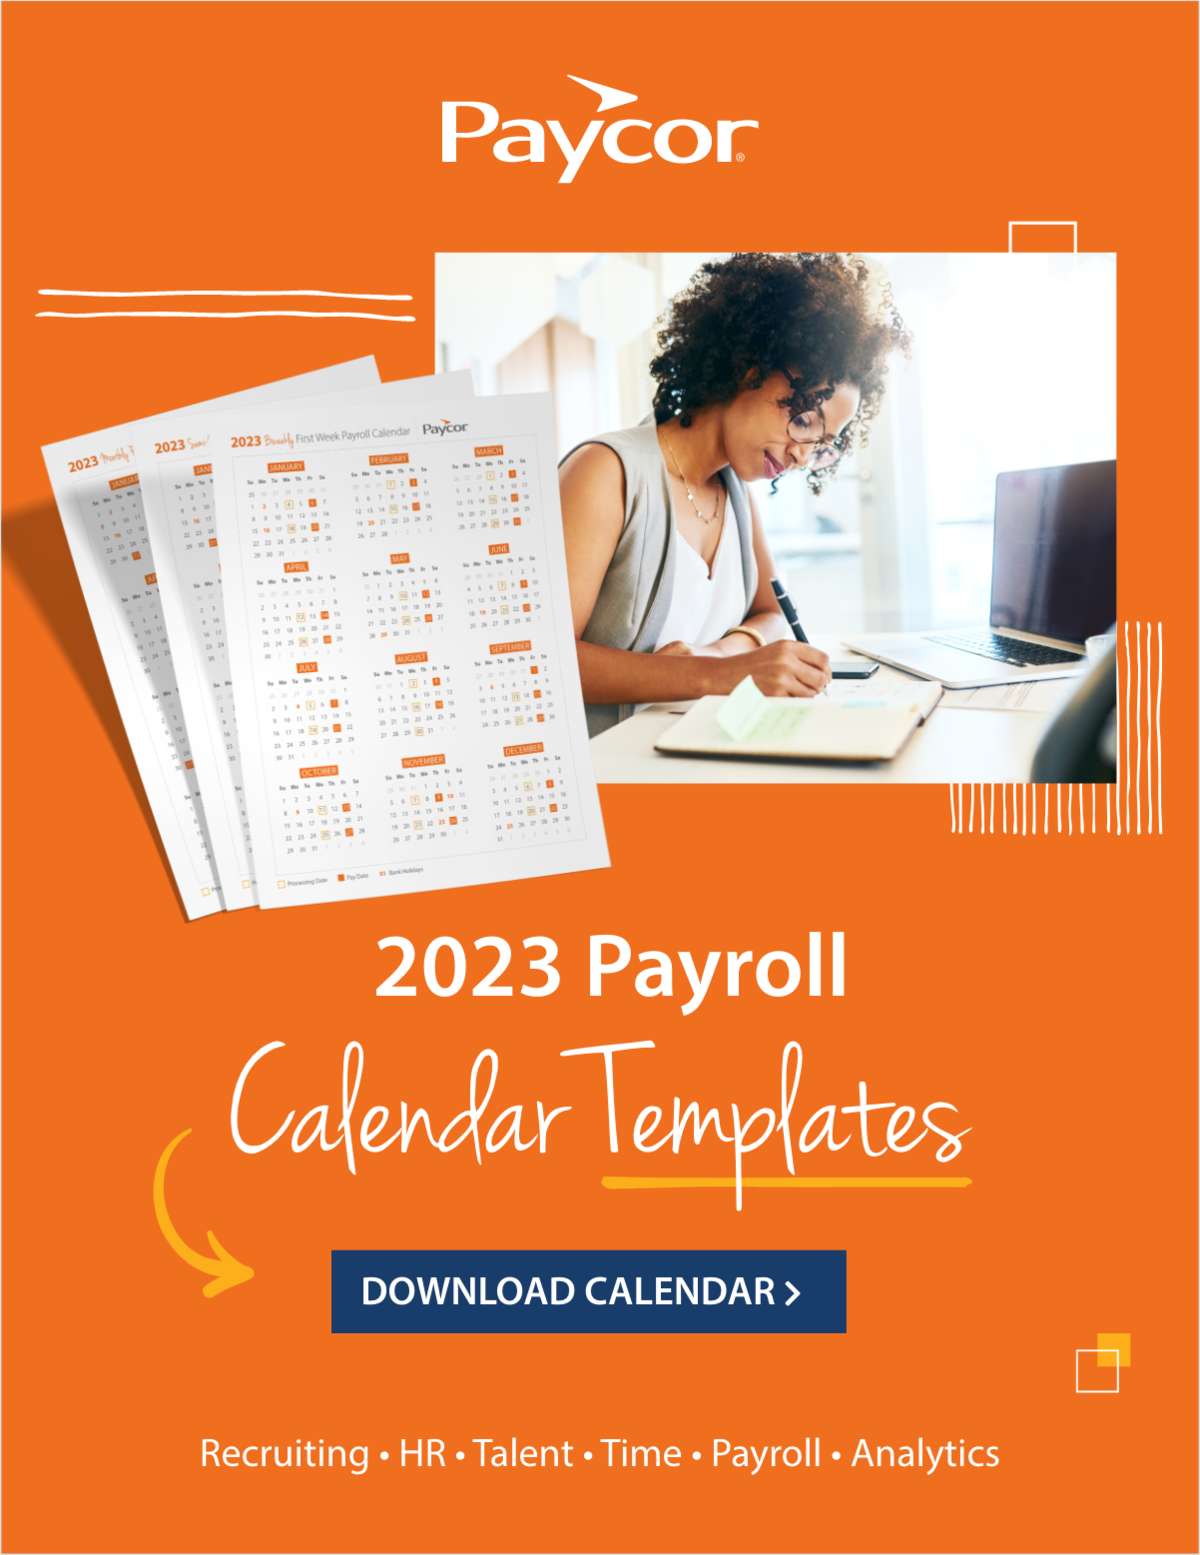 2024 Payroll Calendar Templates, Free Paycor, Inc. Template